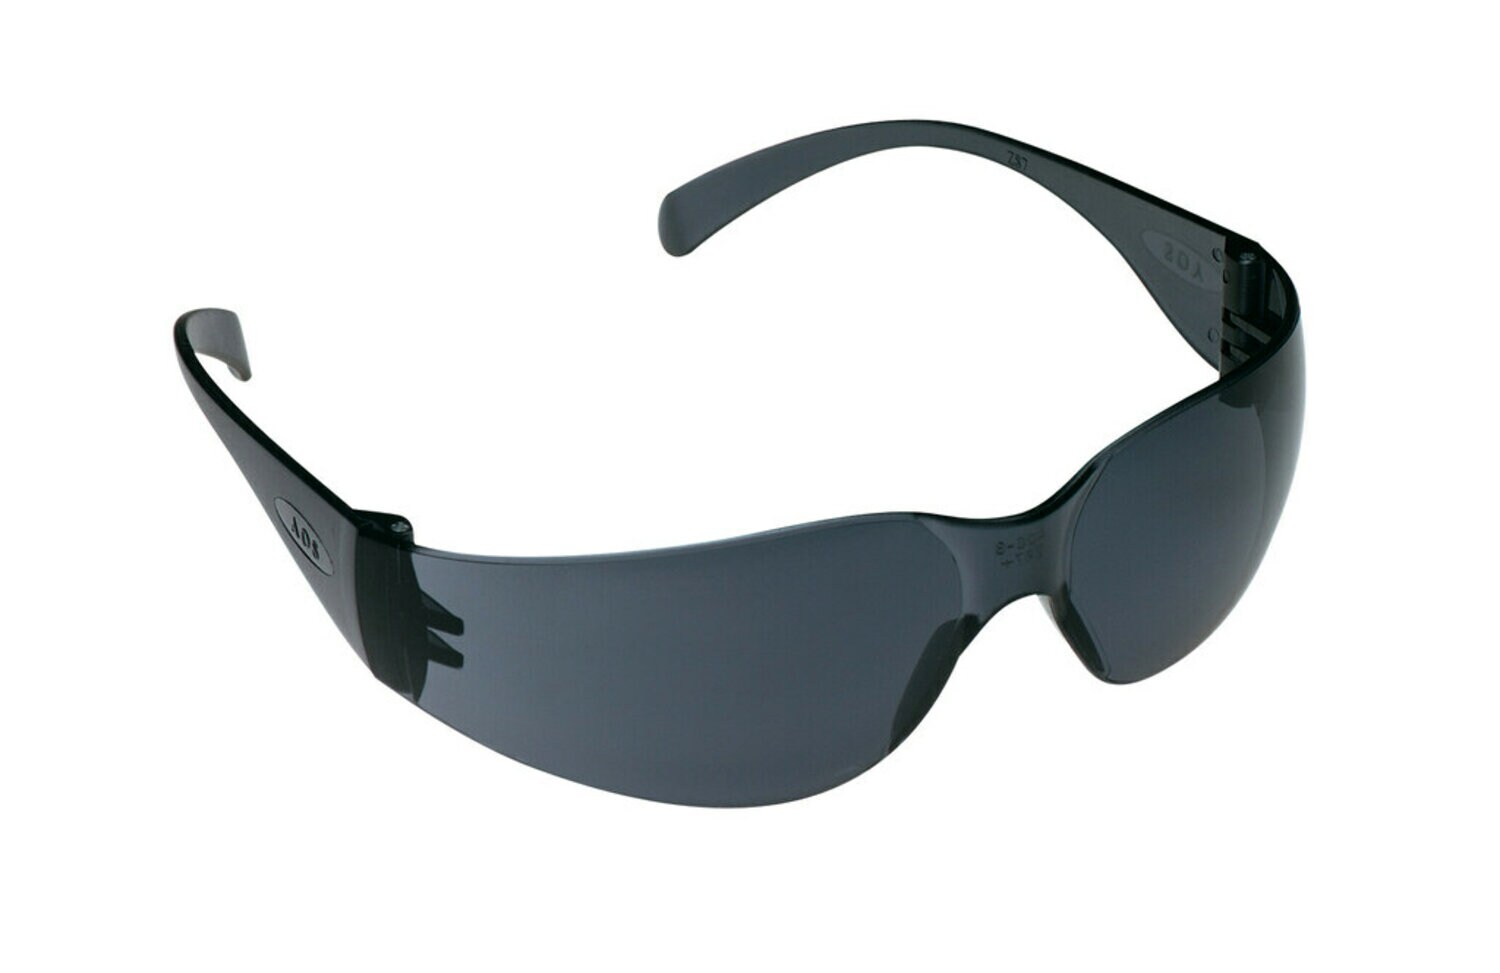 7100114636 - 3M Virtua Protective Eyewear 11327-00000-20 Gray Hard Coat Lens, Gray
Temple 20 EA/Case